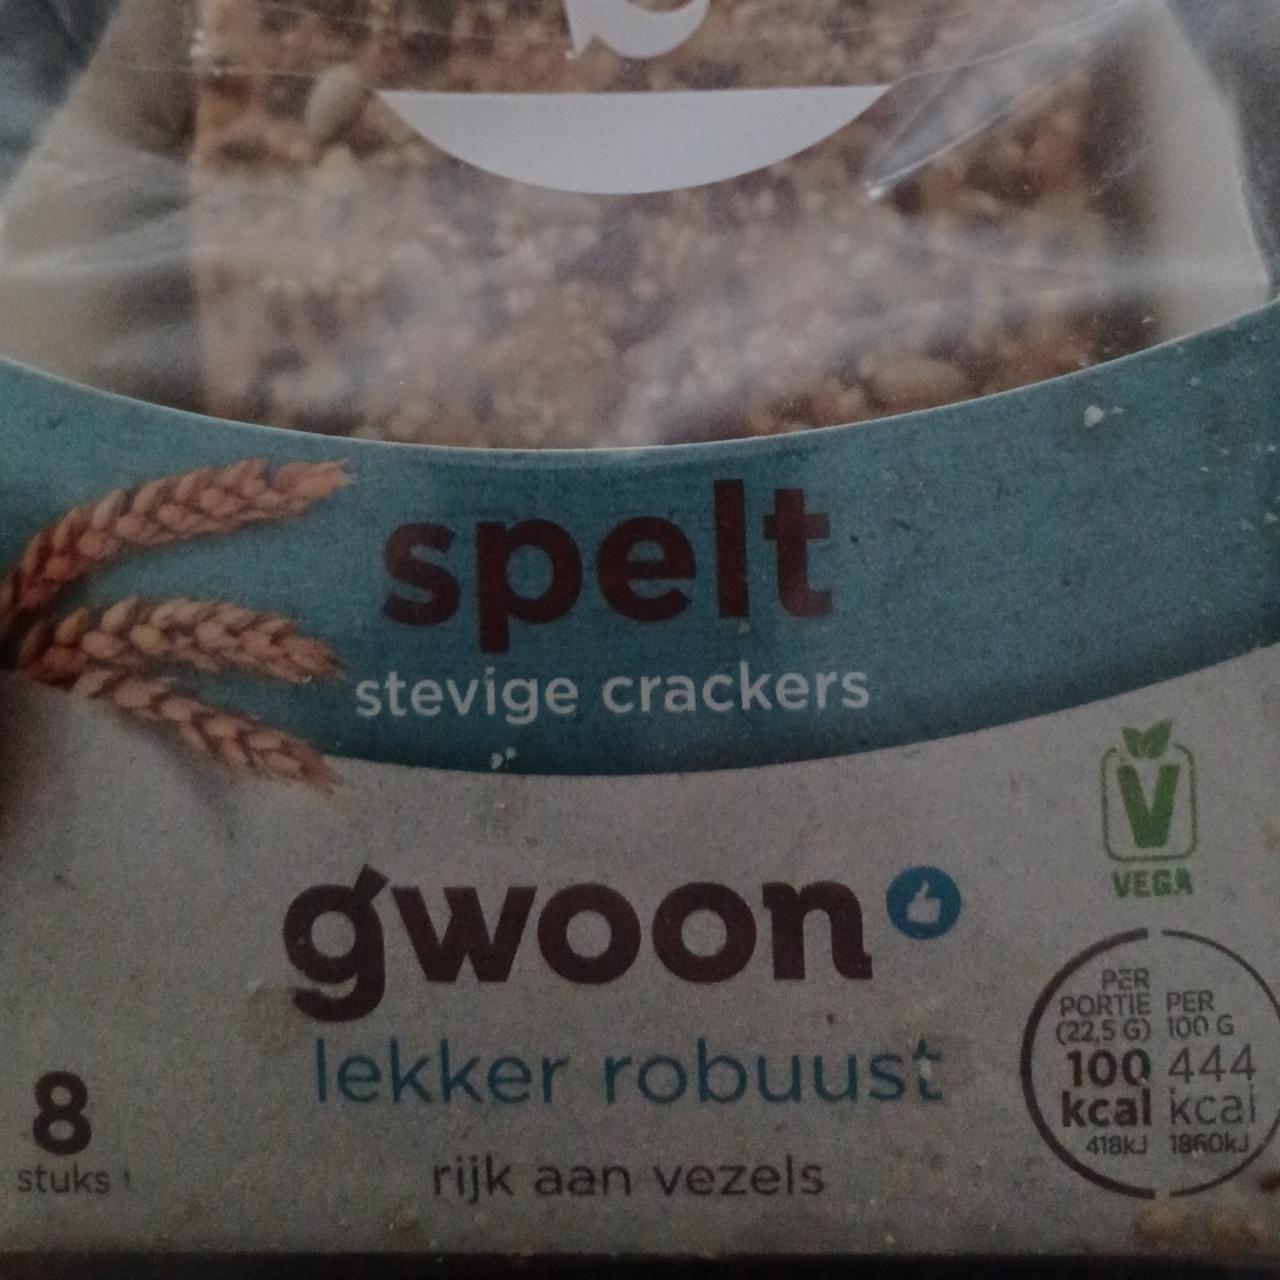 Fotografie - Spelt stevige crackers G'woon